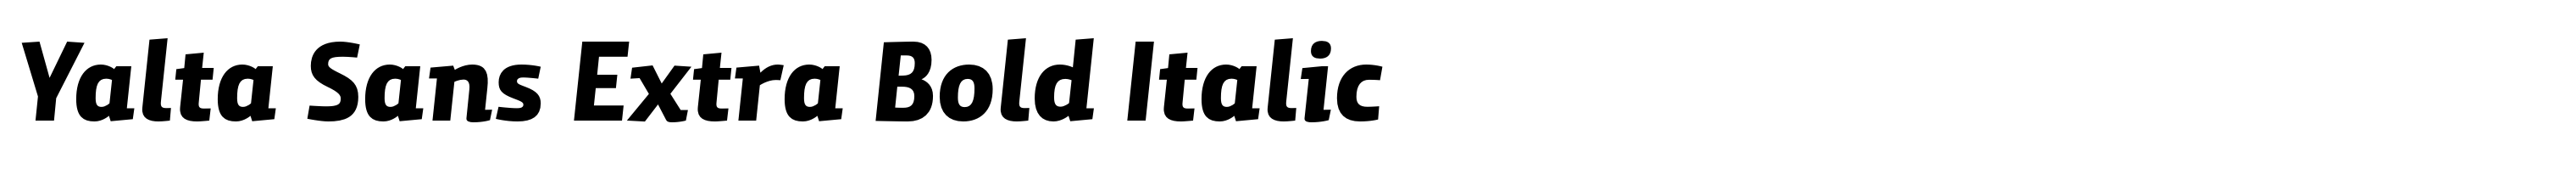 Yalta Sans Extra Bold Italic